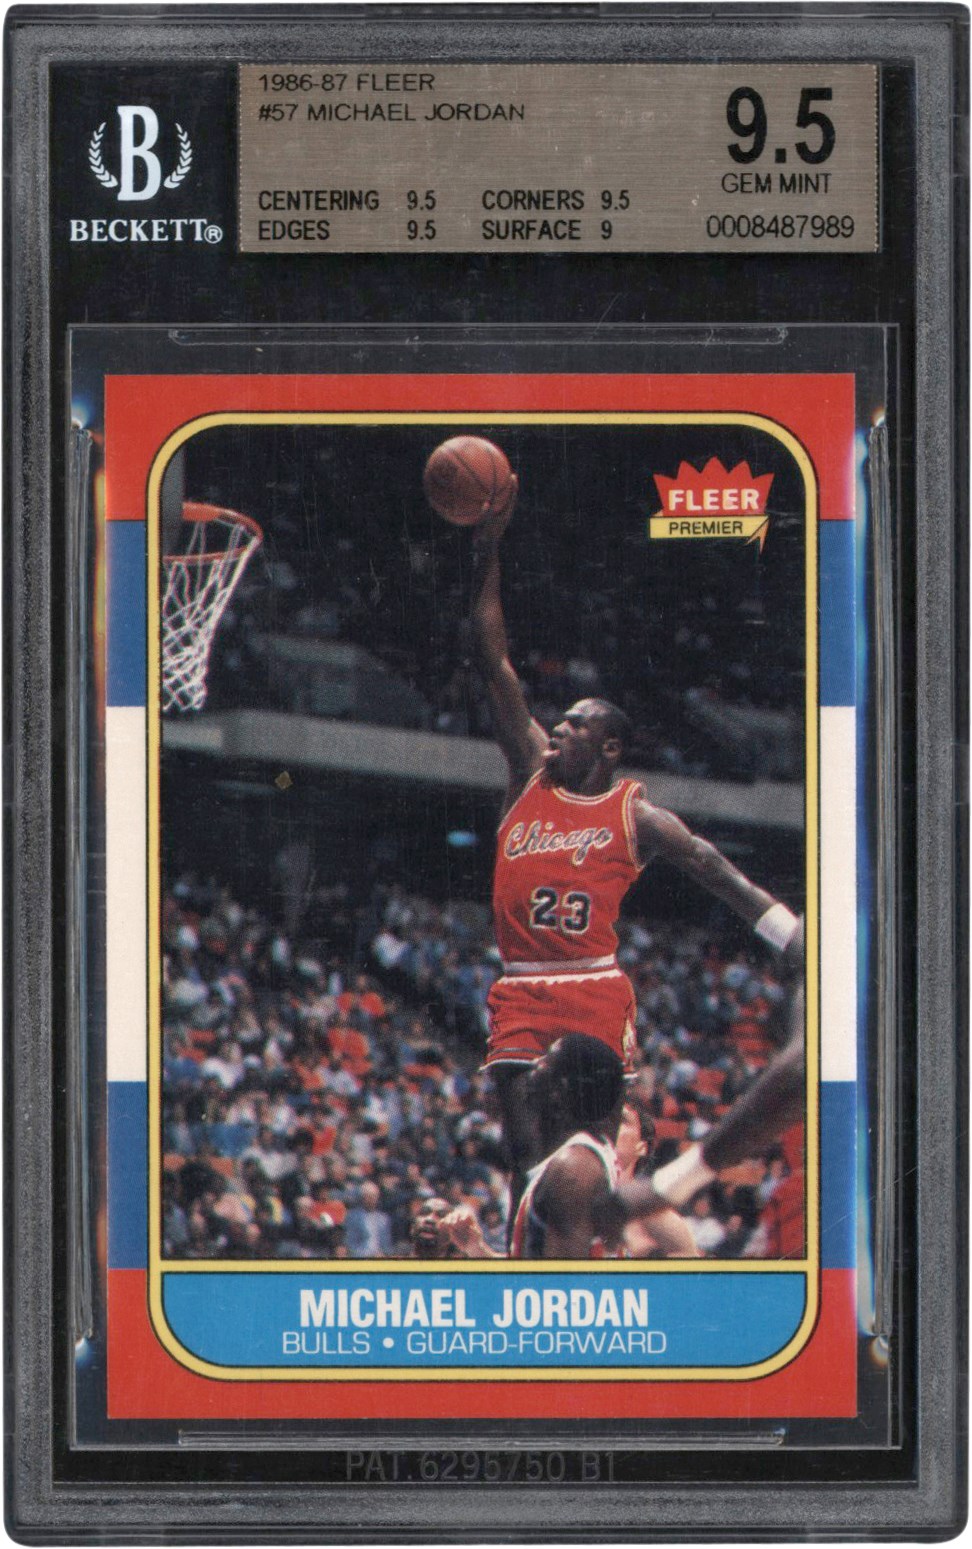 - 986-1987 Fleer Basketball #57 Michael Jordan Rookie Card BGS GEM MINT 9.5